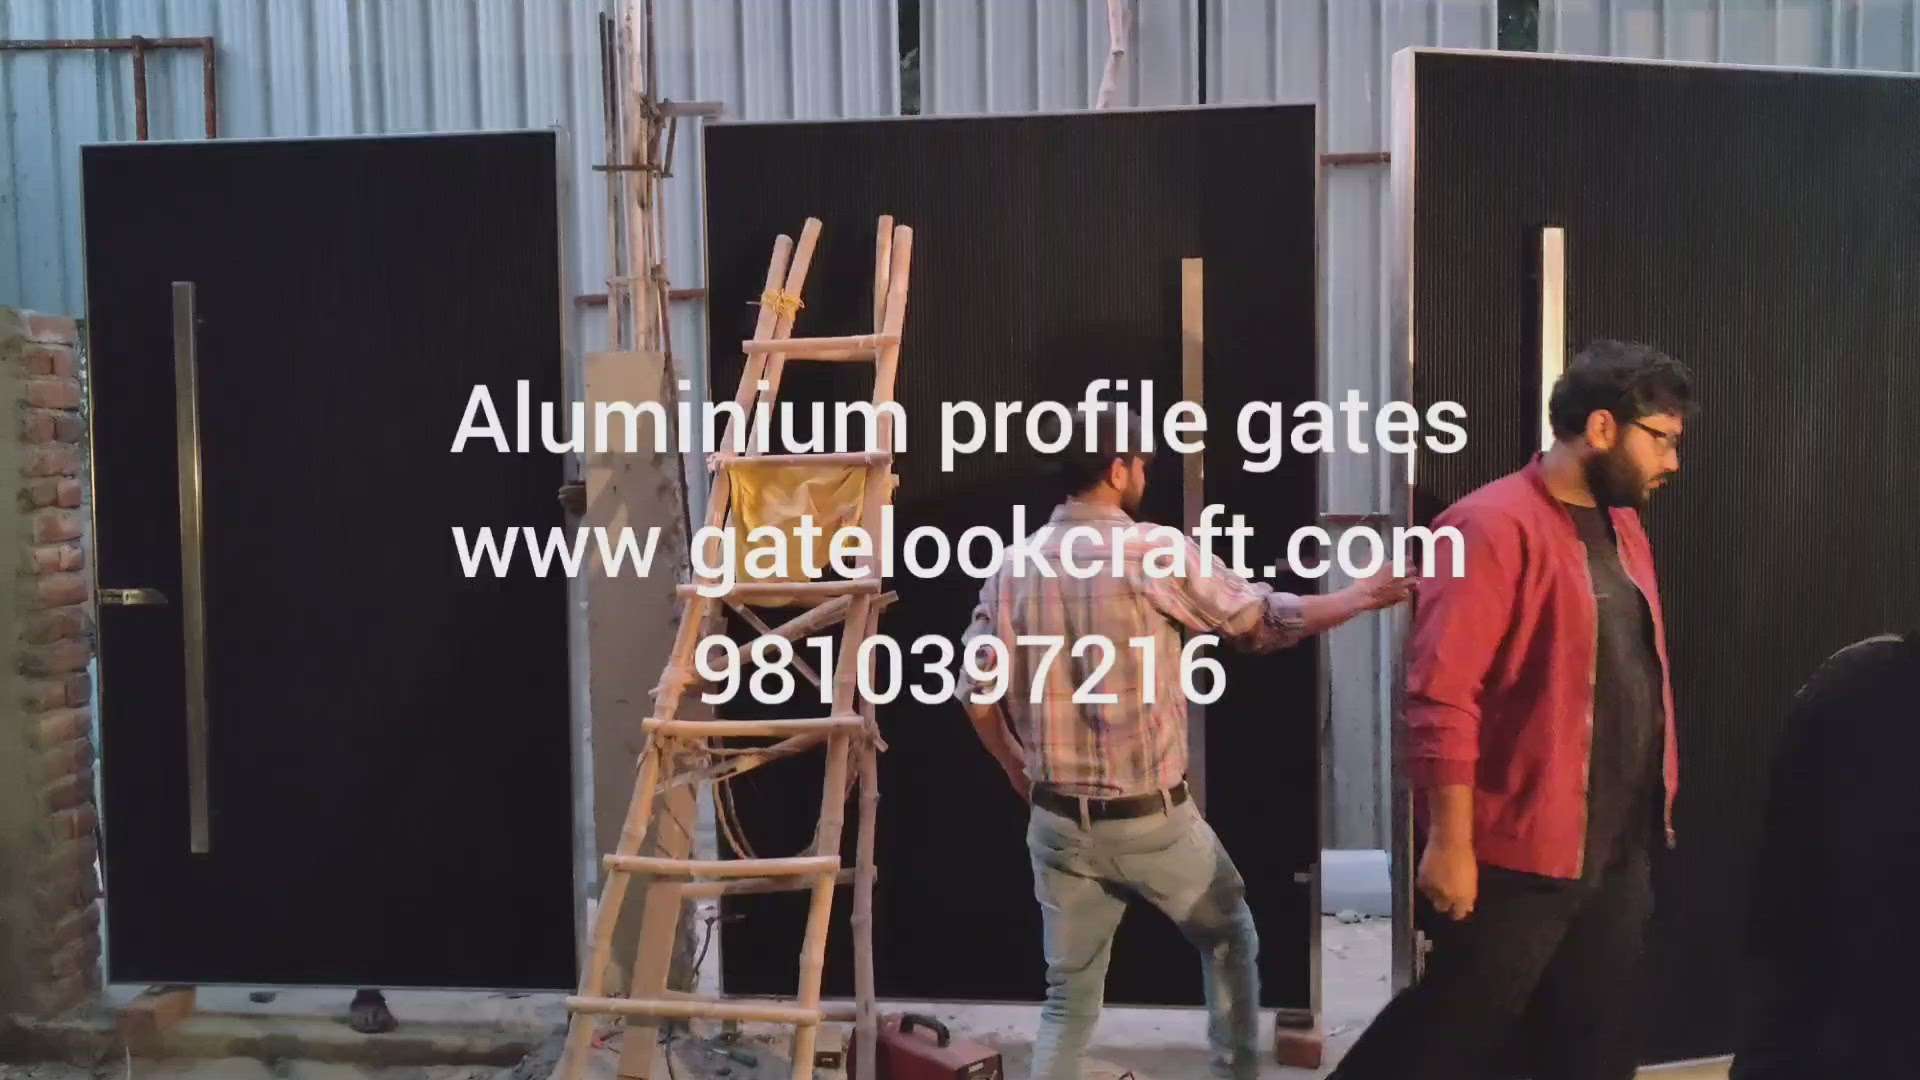 Aluminium profile gates by Hibza sterling interiors pvt ltd #aluminiumprofilegate #aluminiumclading #Aotumationgates #aluminiumpanelgates #aluminiumgates #maingate #fancygates #modolergate #slidinggates